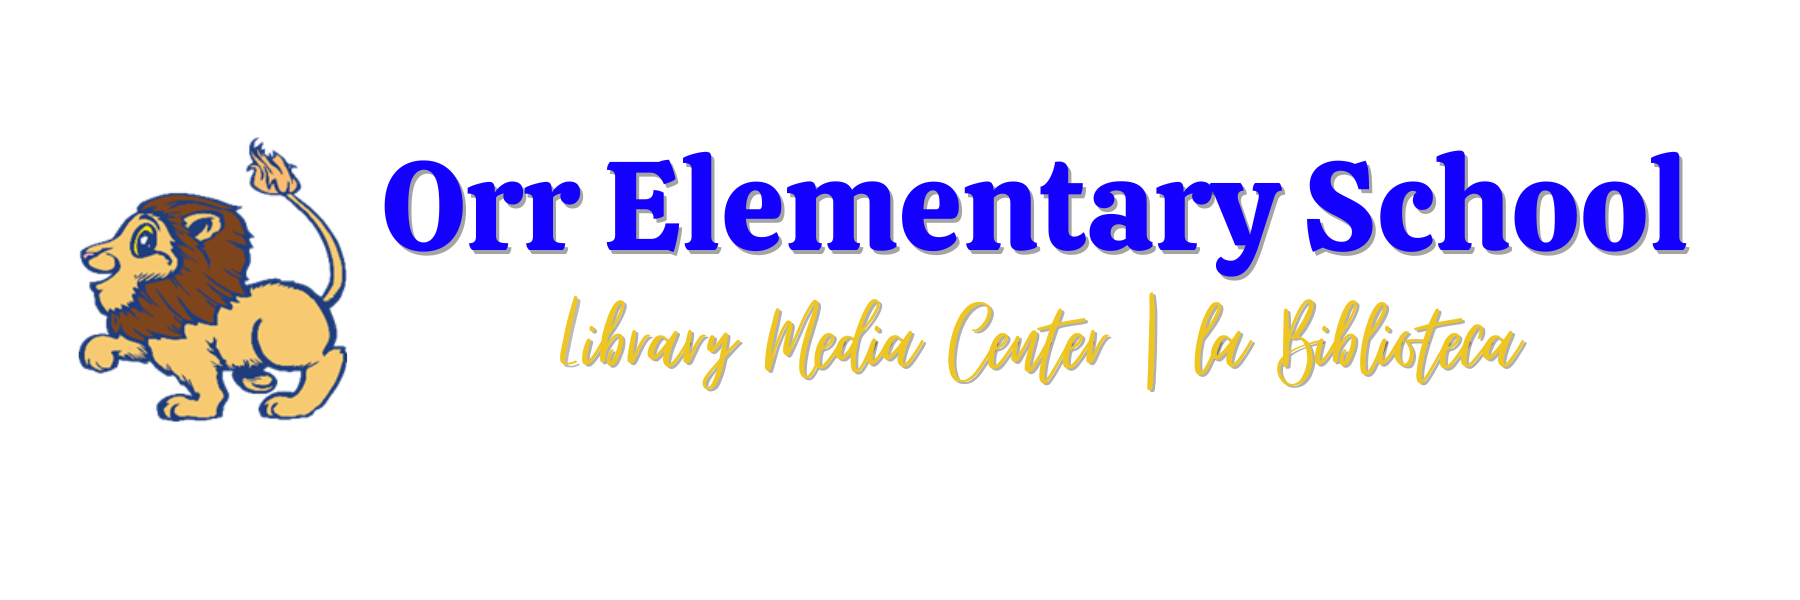 Orr Elementary School Library Media Center/La Bibliotecha